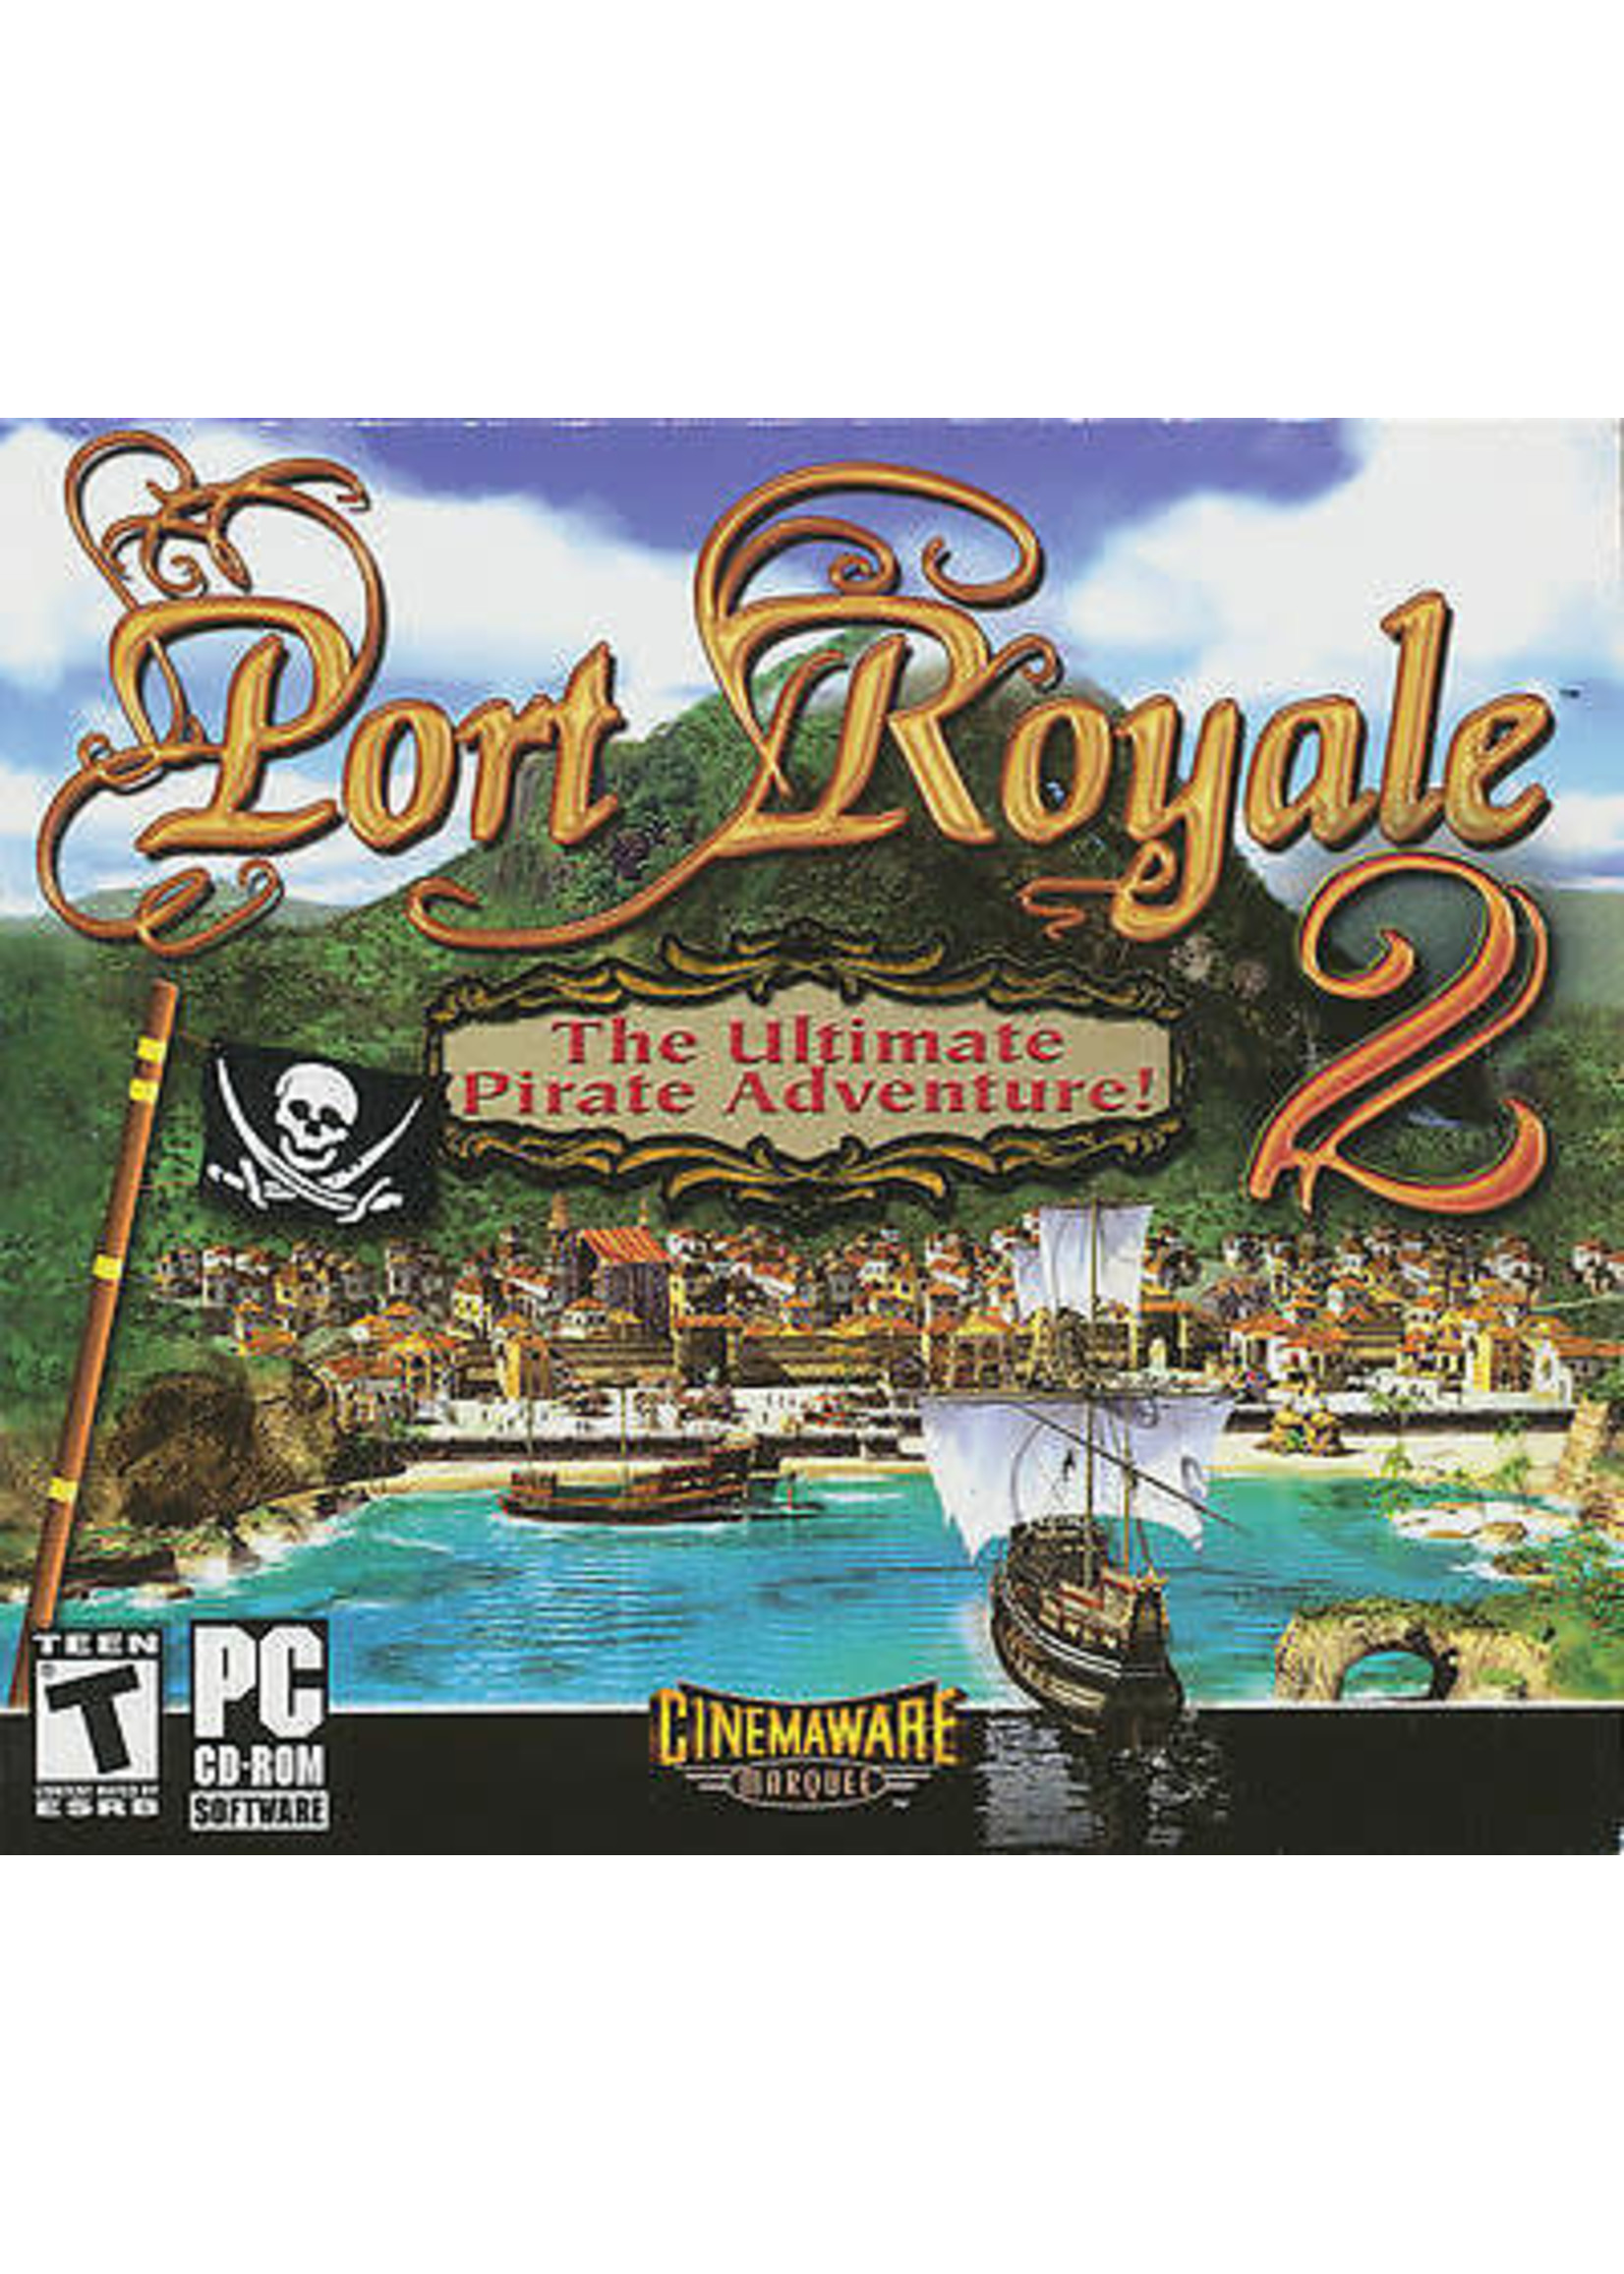 Port Royal 2 PC Games